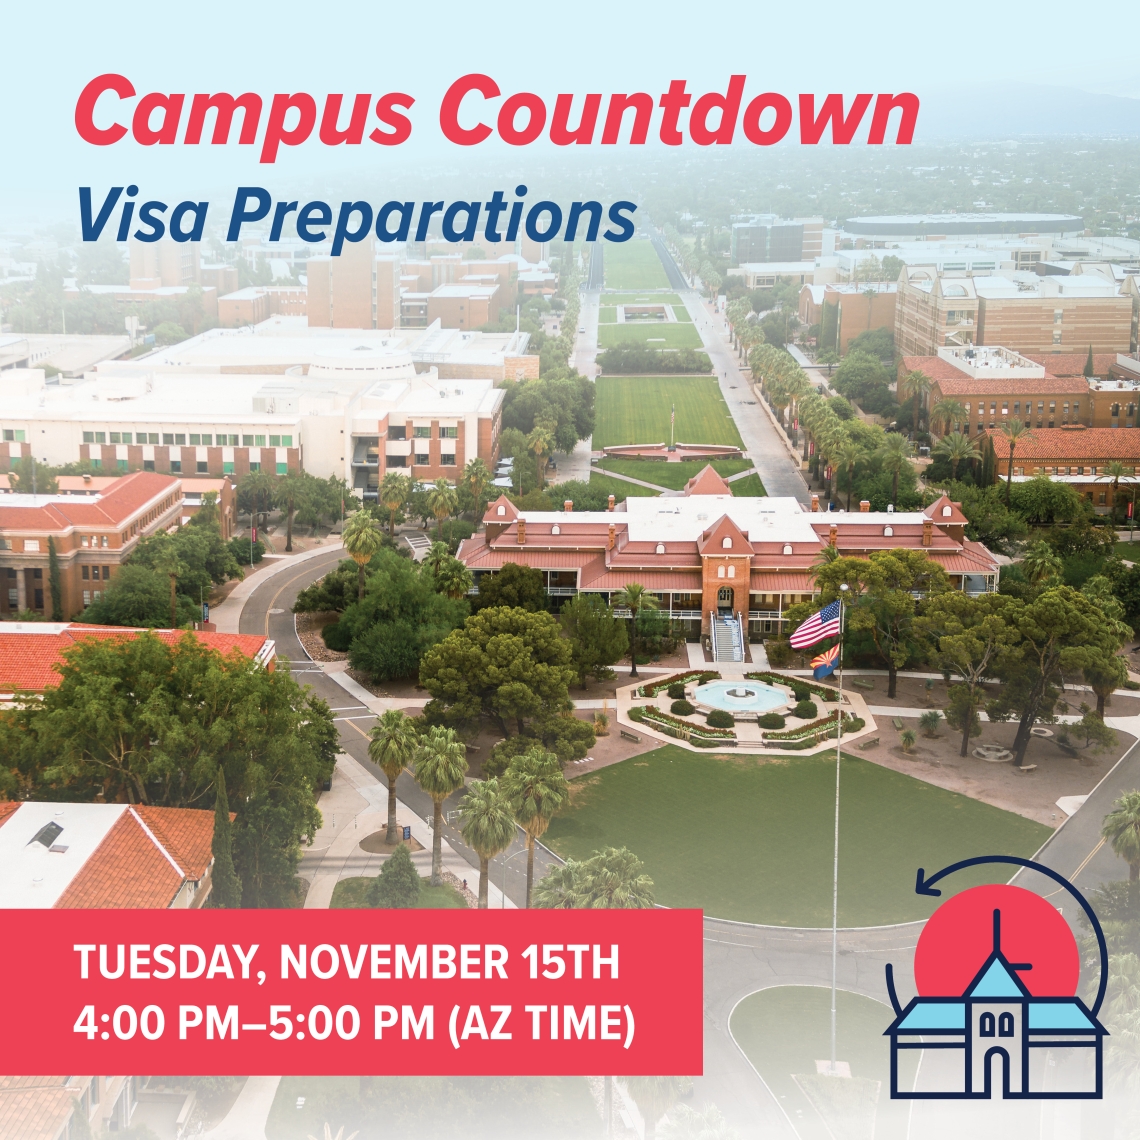 Campus Countdown Visa Preparations